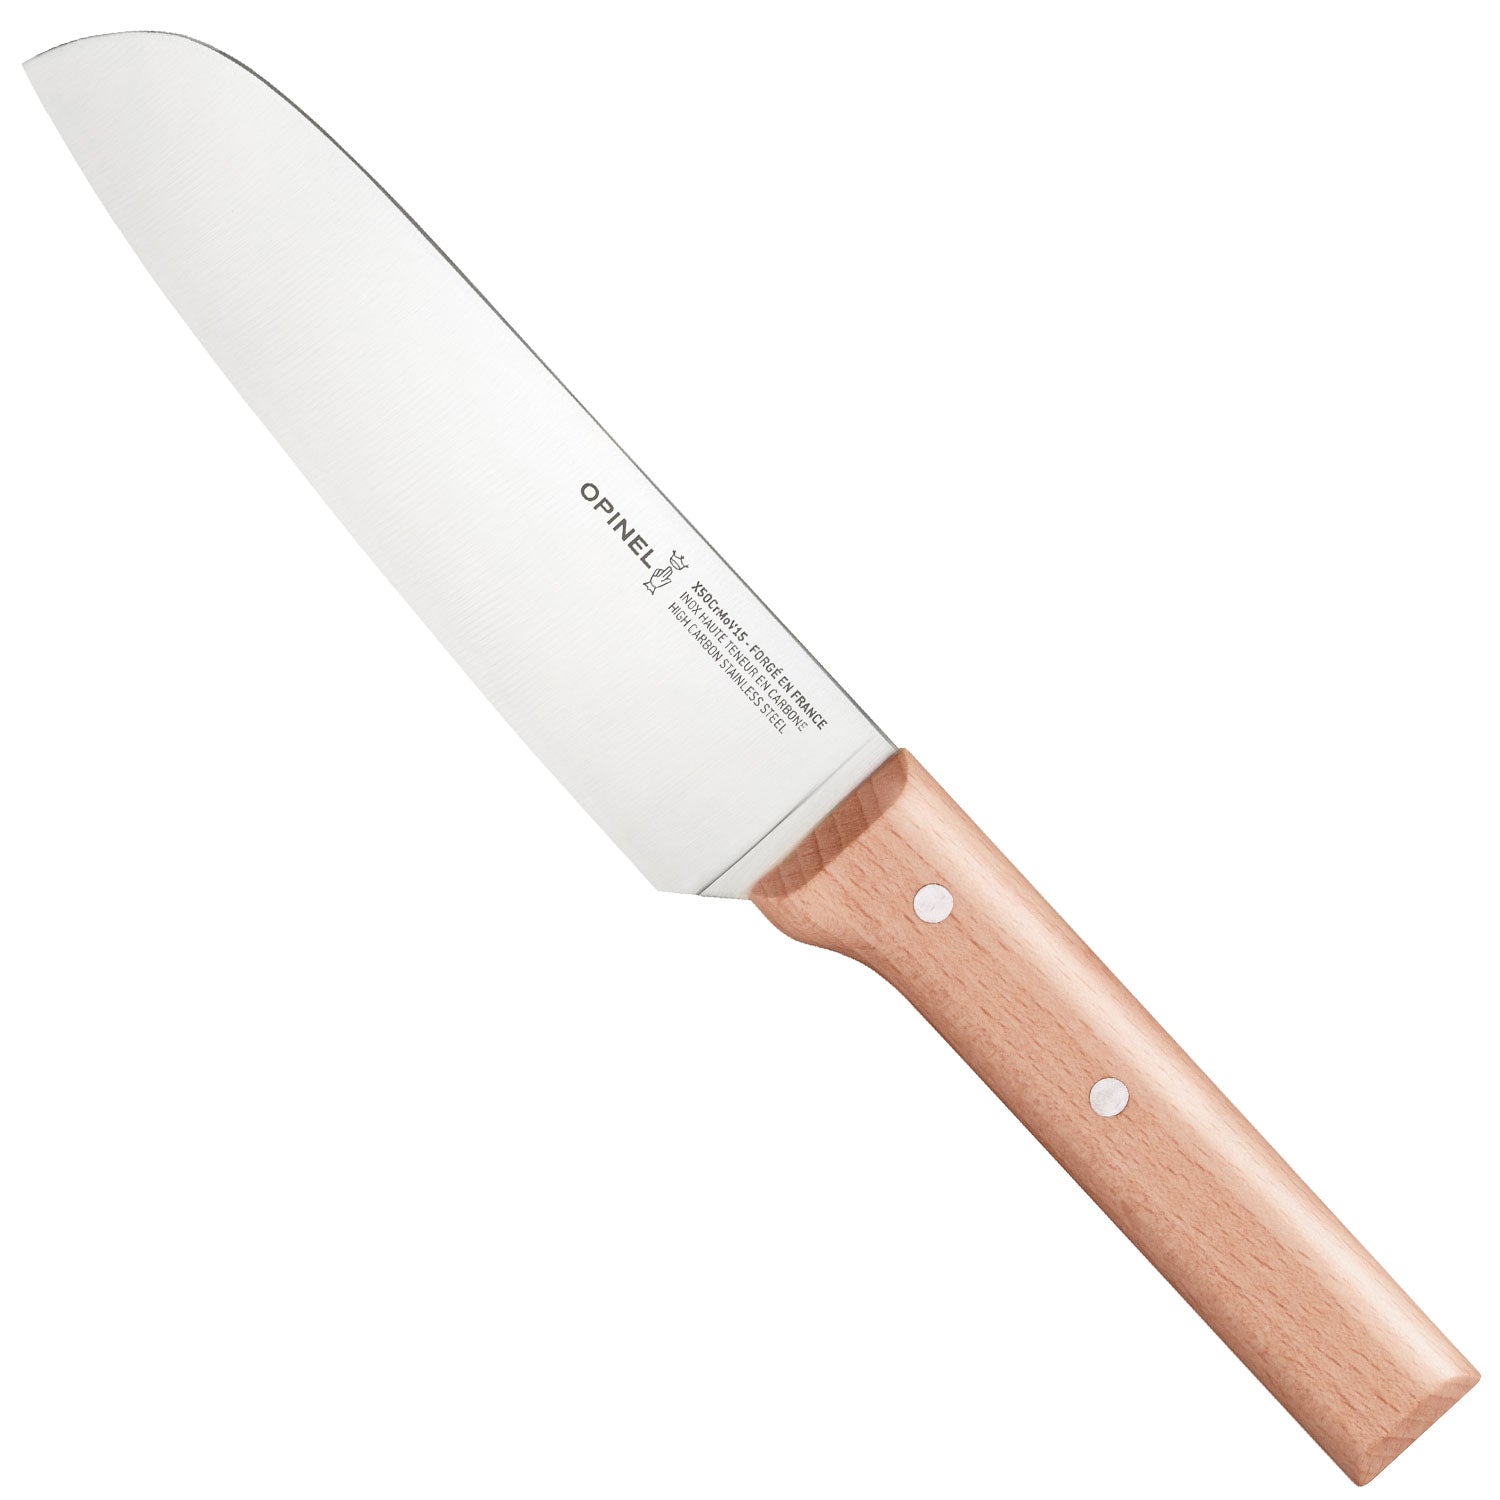 4PCS Serrated Blade Steak Knife Set 5.5'' Stainless Steel Table Meat Slicer  Tool